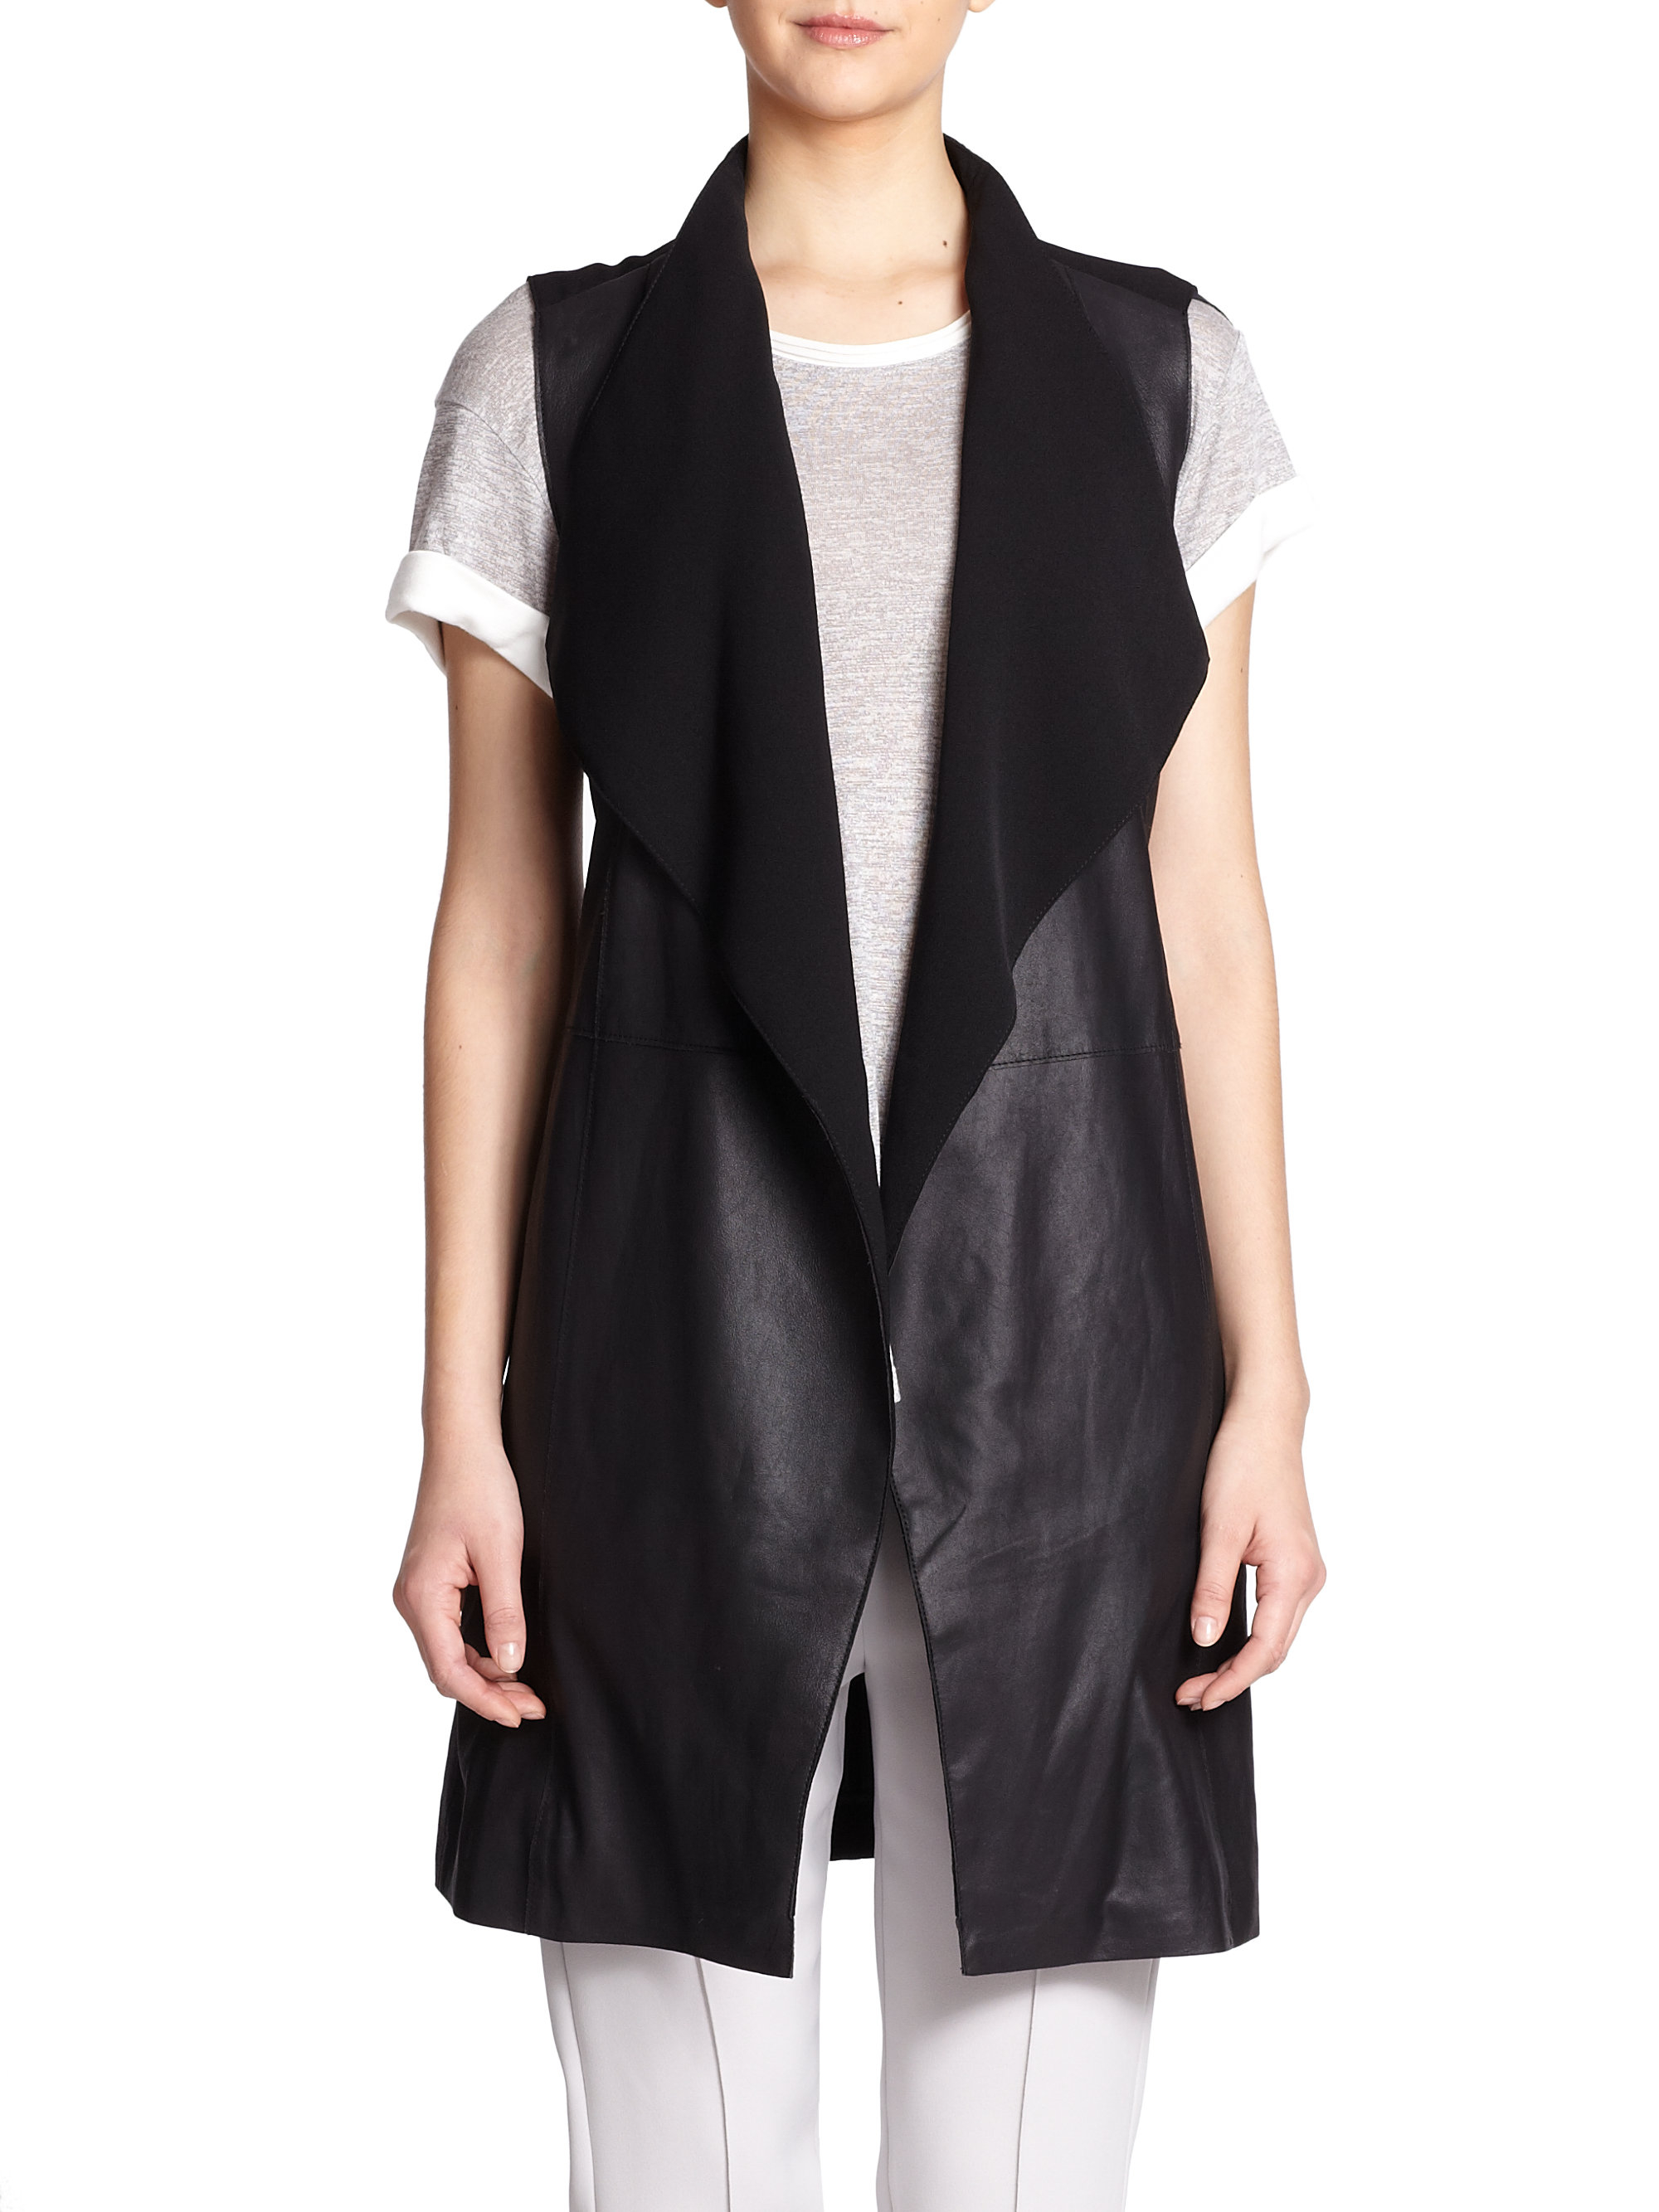 Vince Black Long Leather Vest Product 1 27241841 0 861318896 Normal 